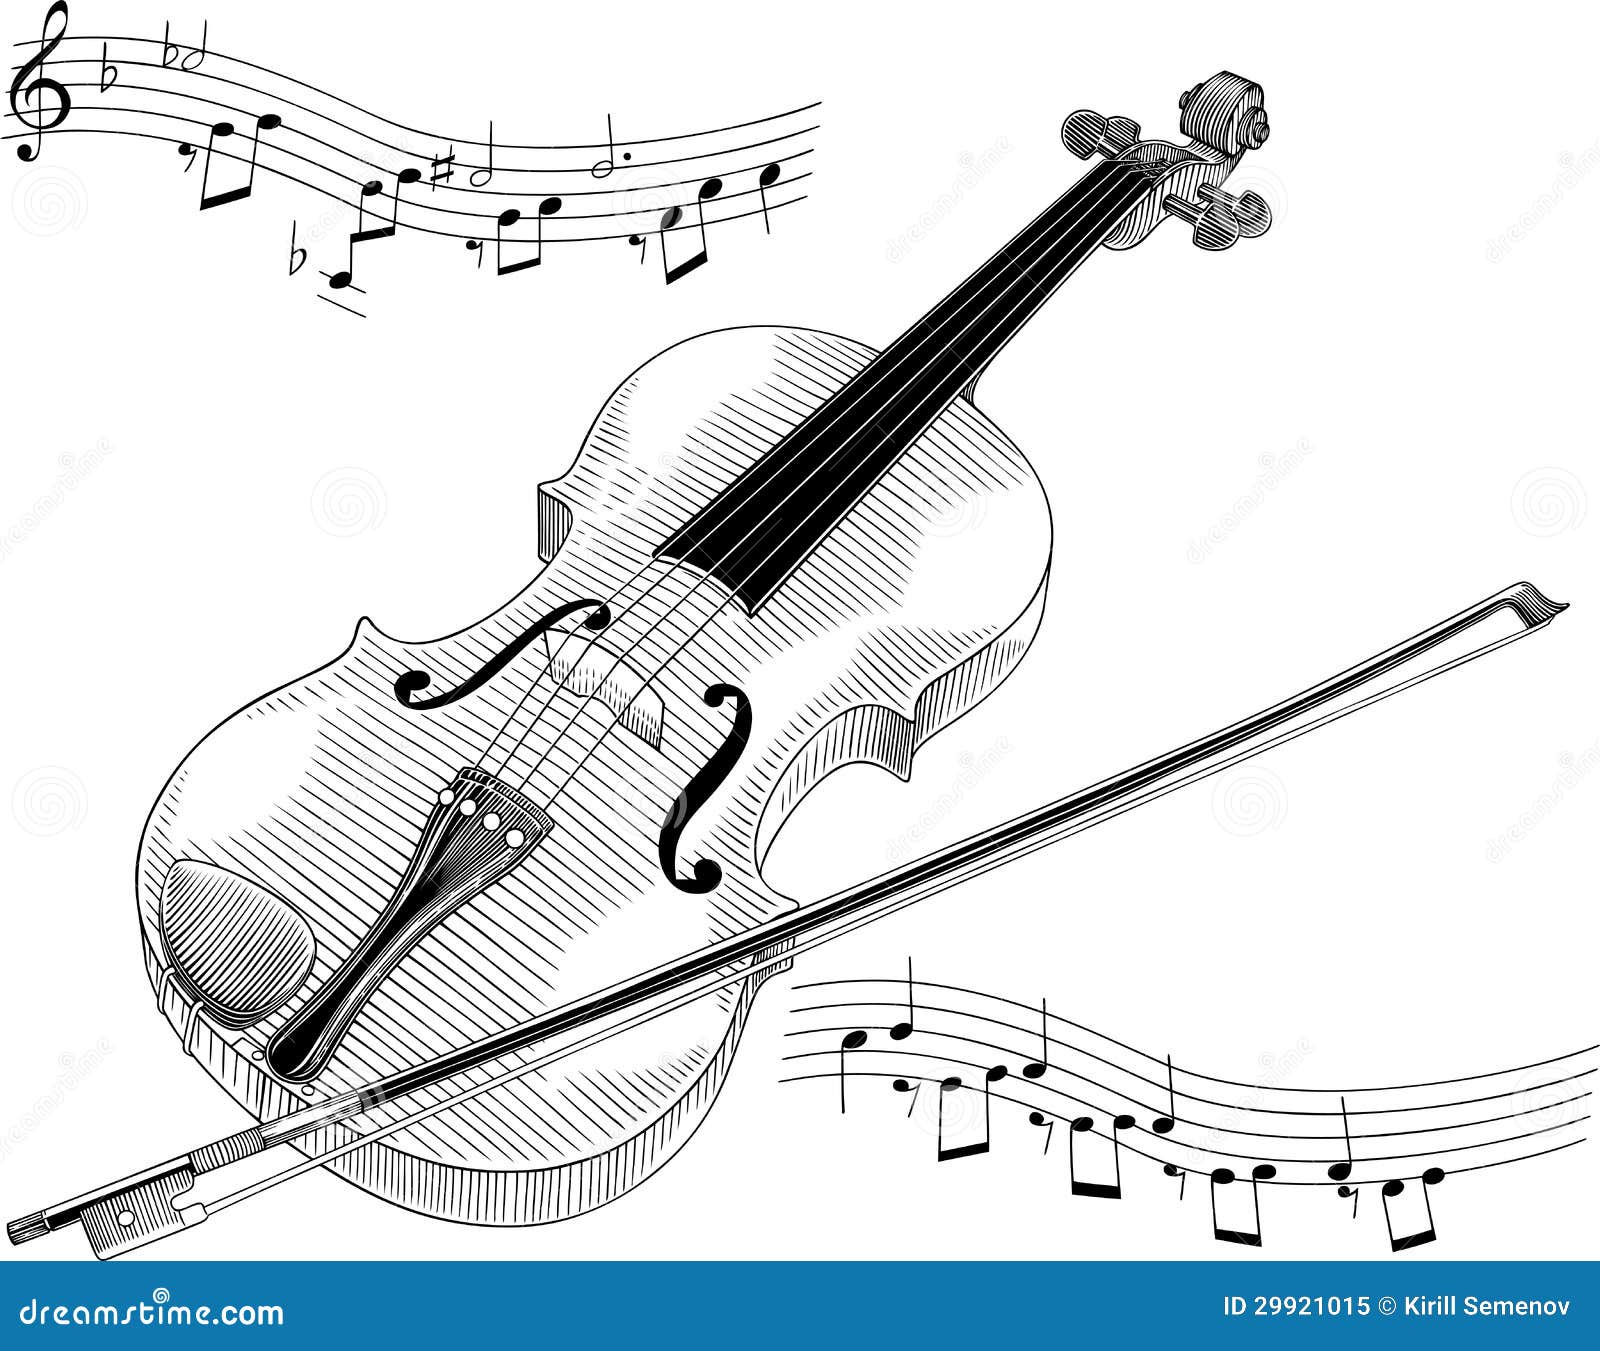 free violin clipart black and white - photo #14